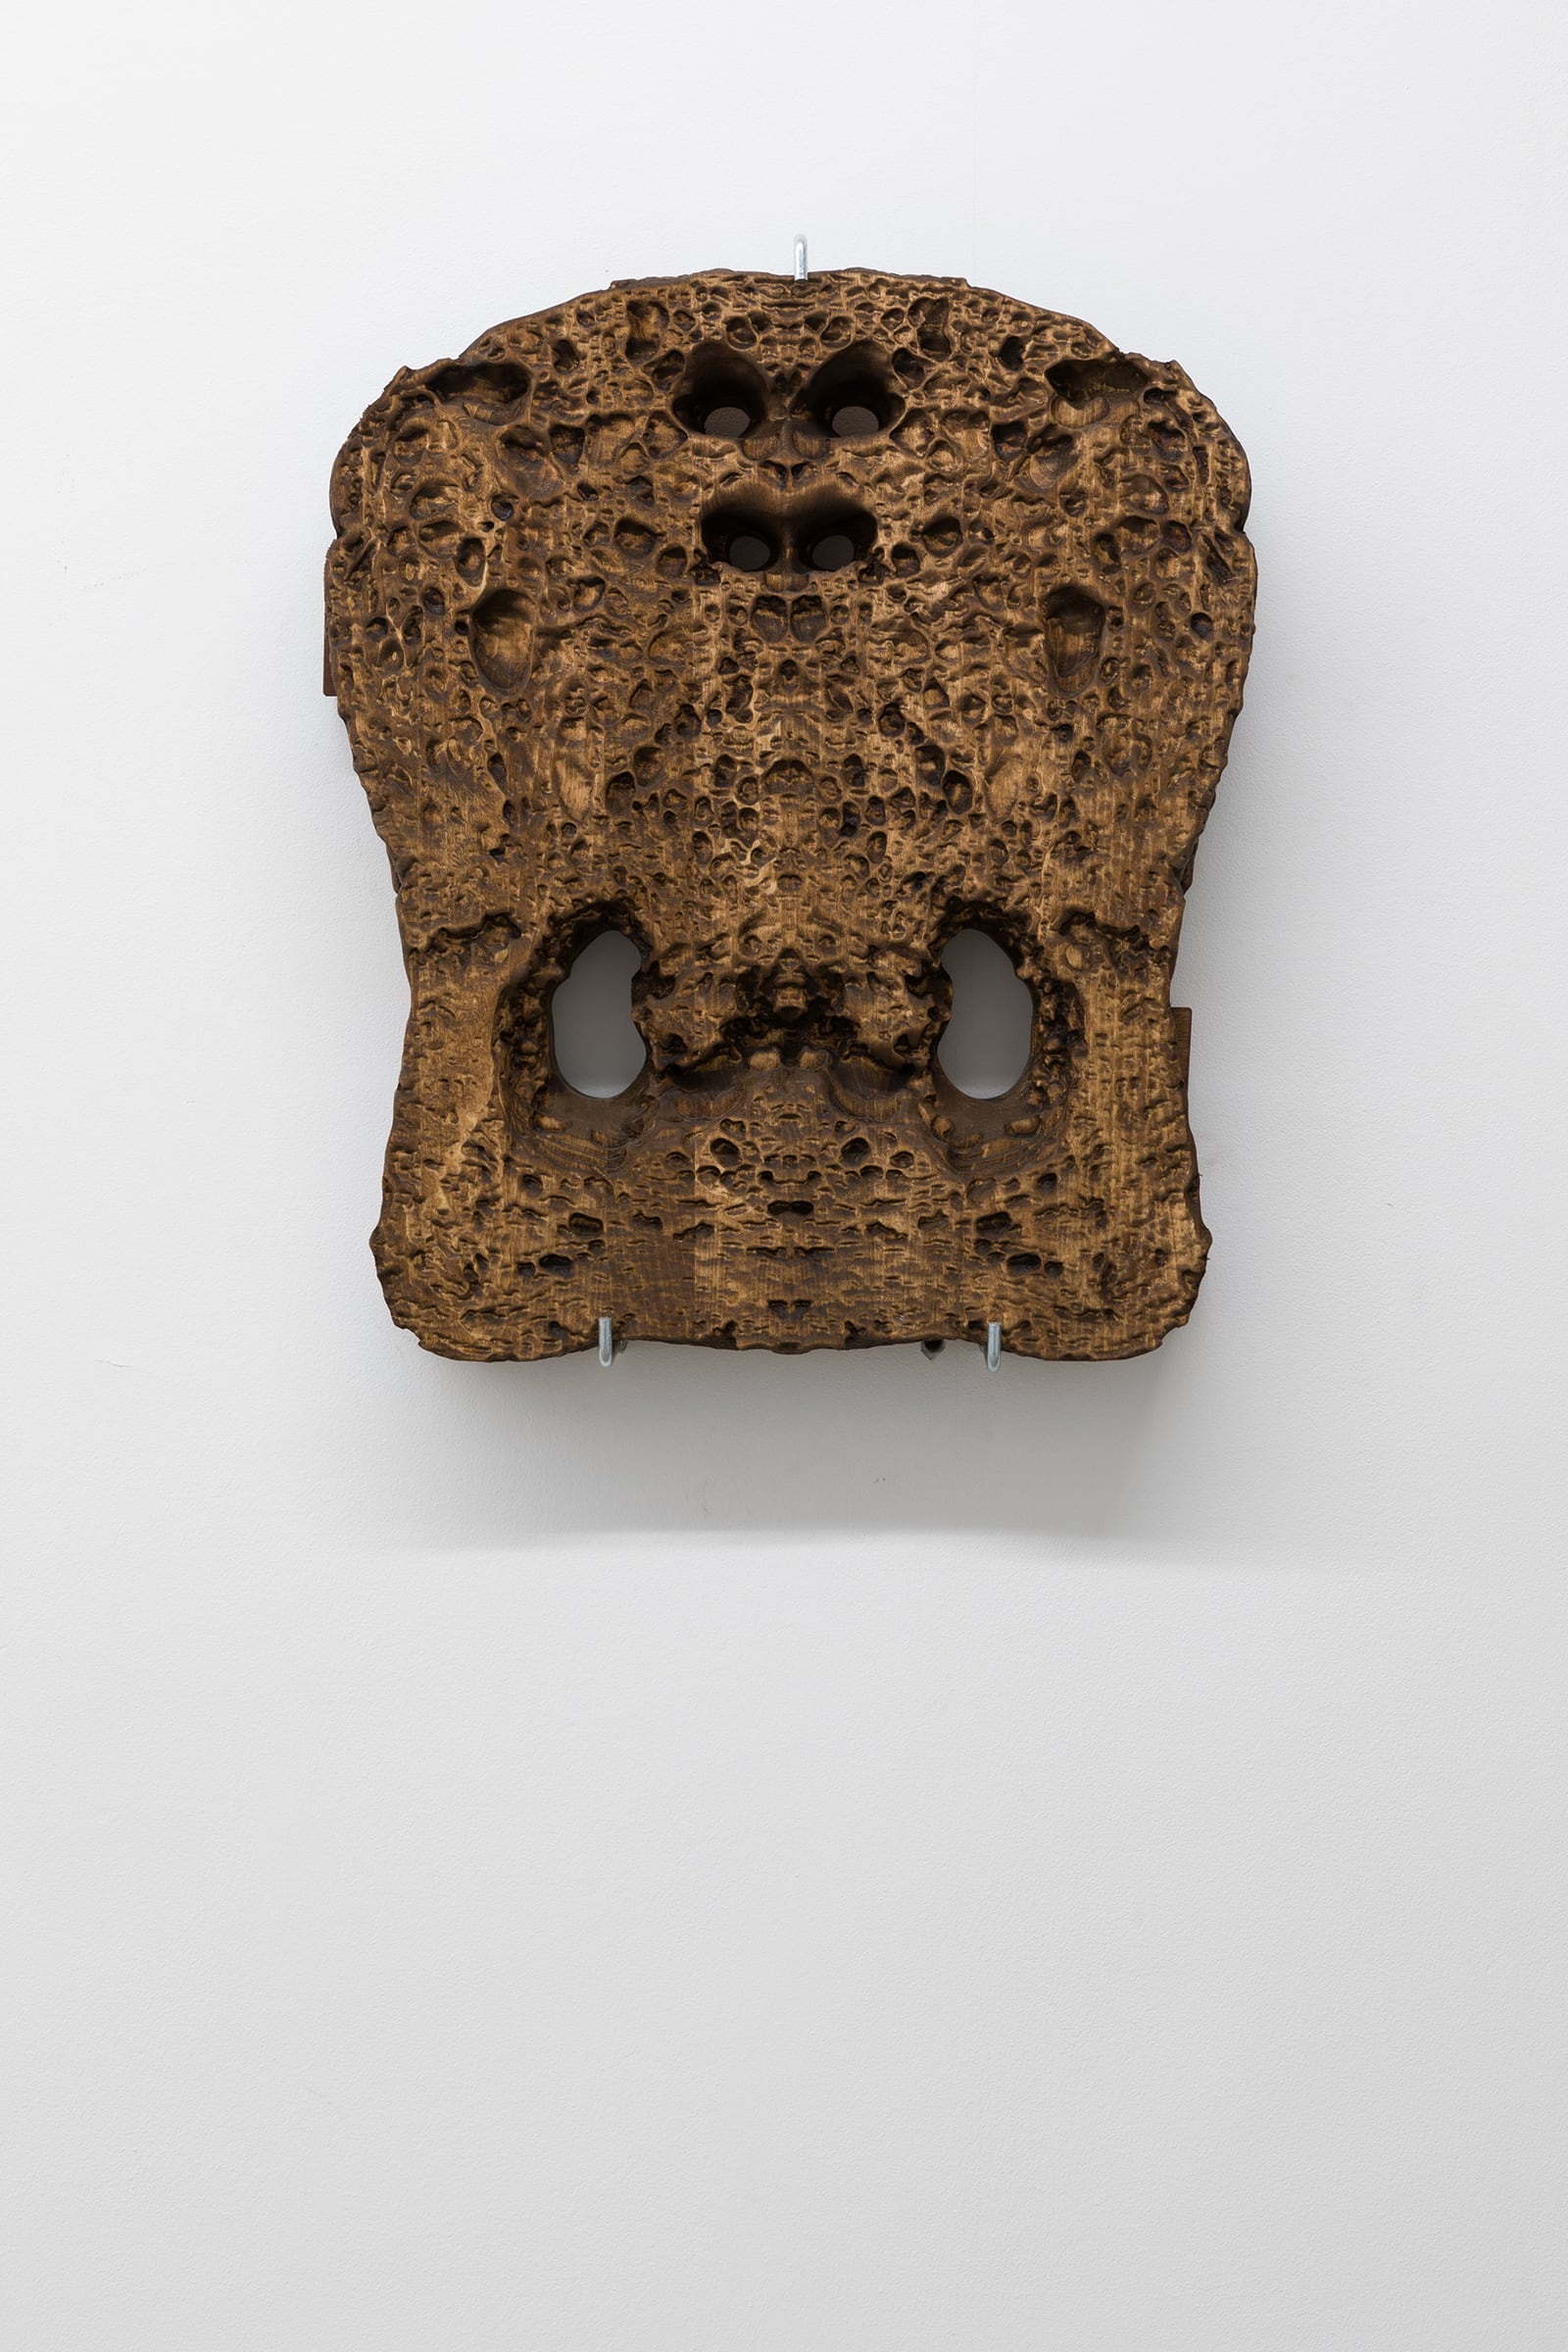 Anatoly Osmolovsky, Untitled (Bread), 2023, wood, paint, 49 x 54 cm